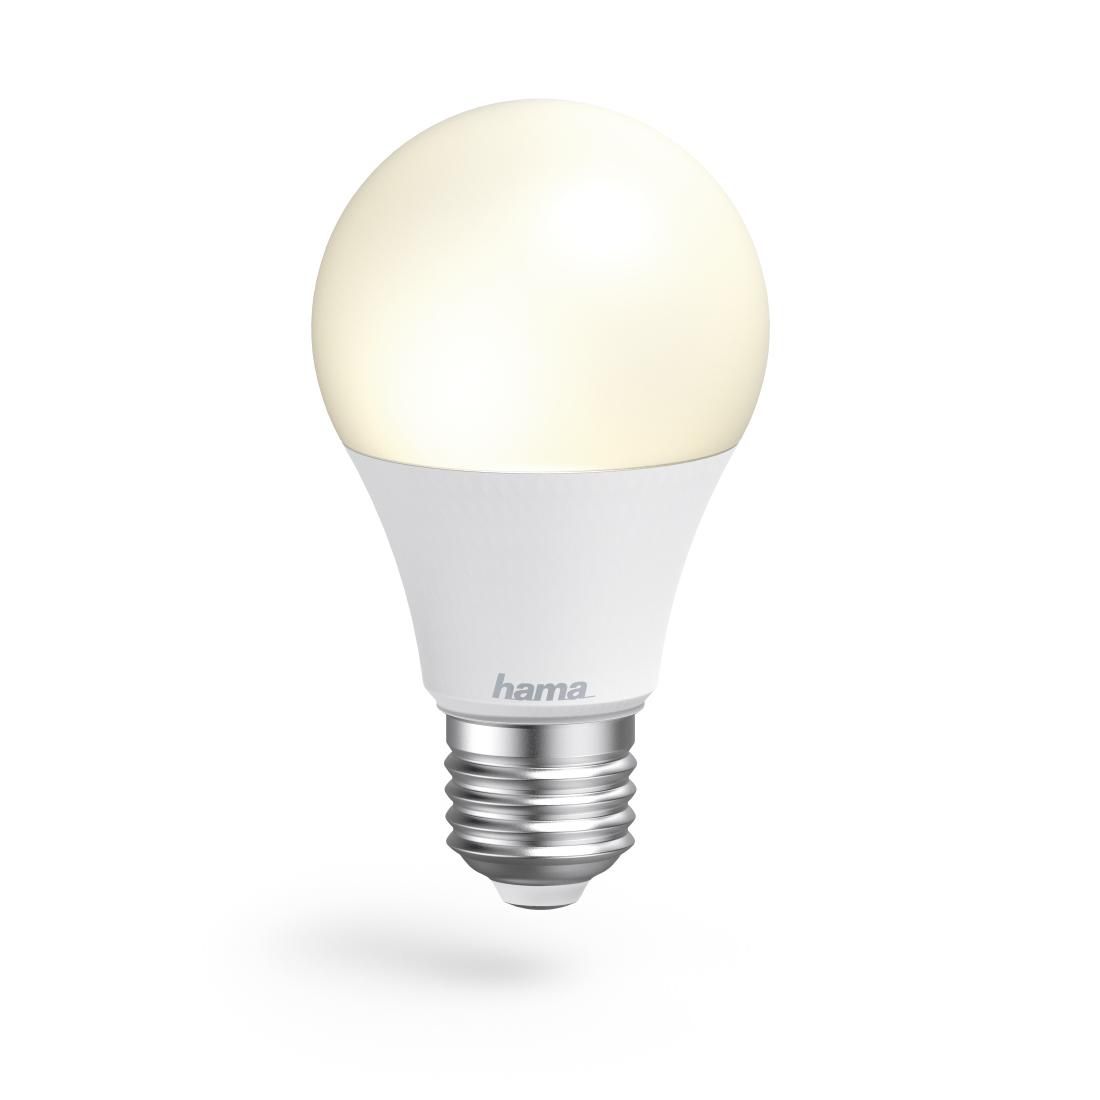 Hama 176600 W128328292 0 Energy-Saving Lamp 9 W E27 